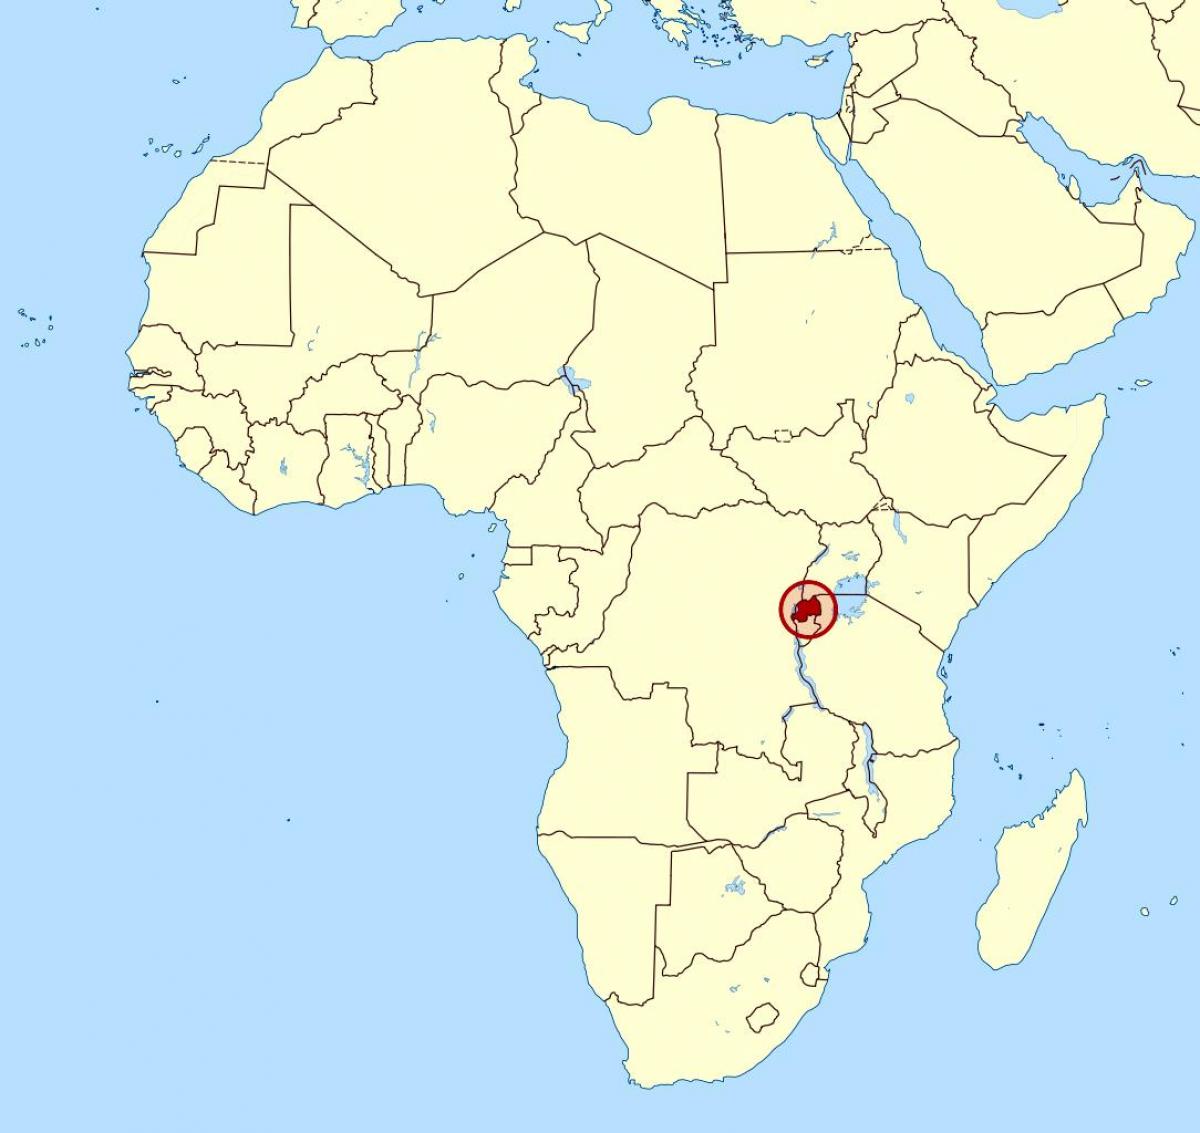 kort over Rwanda i afrika